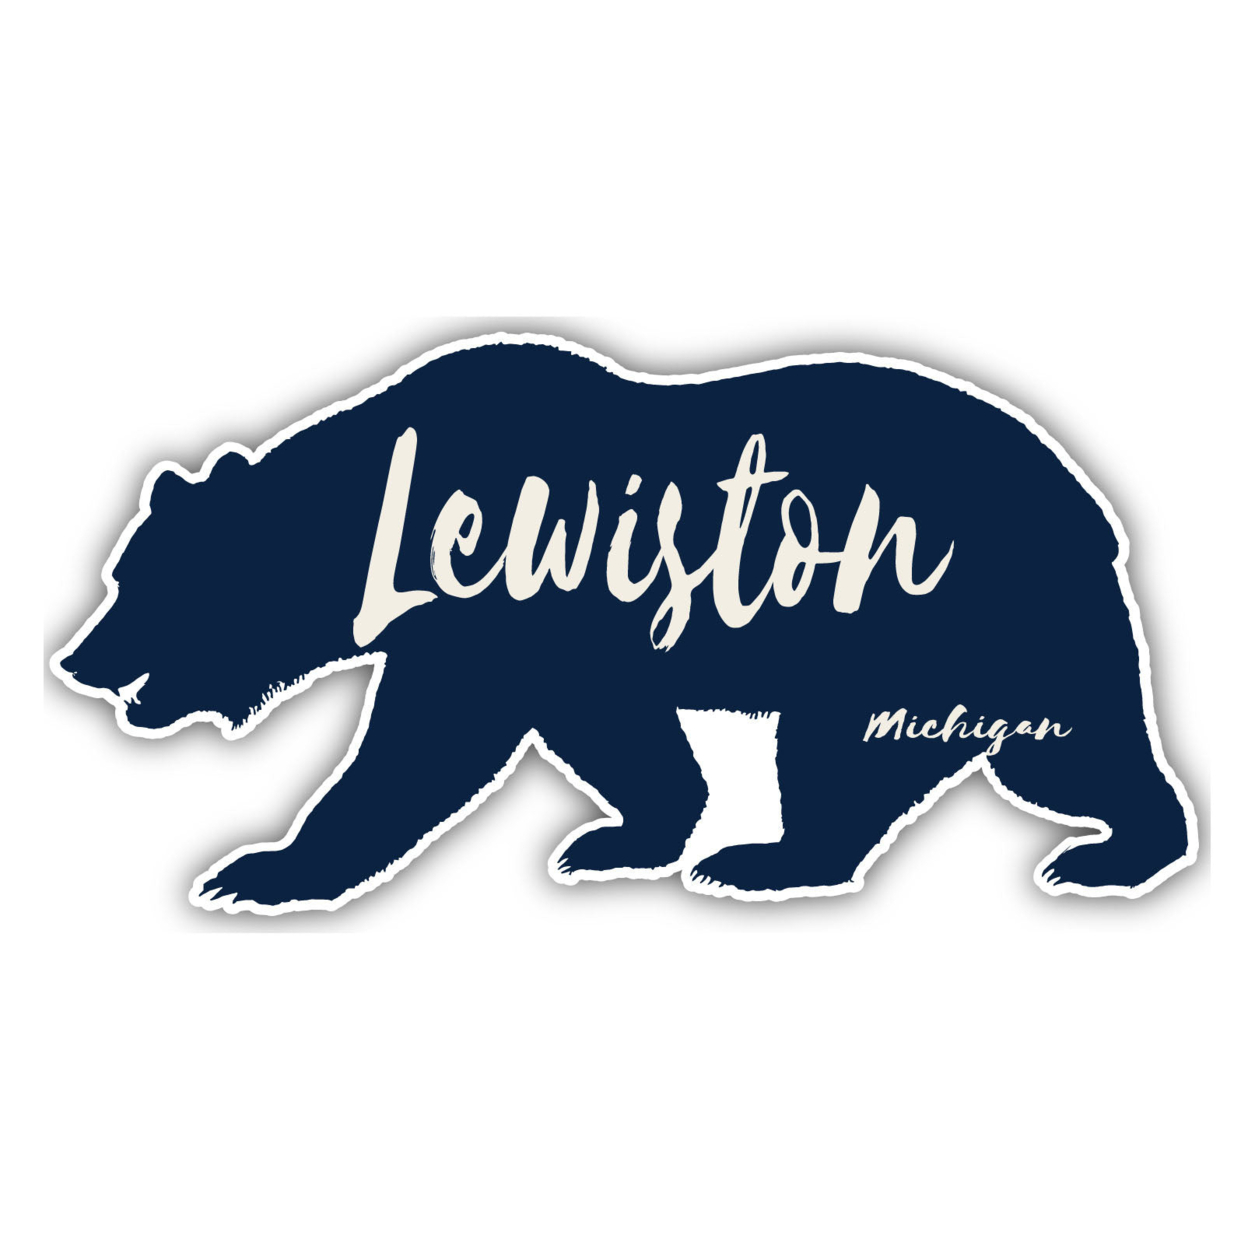 Lewiston Michigan Souvenir Decorative Stickers (Choose Theme And Size) - 2-Inch, Bear